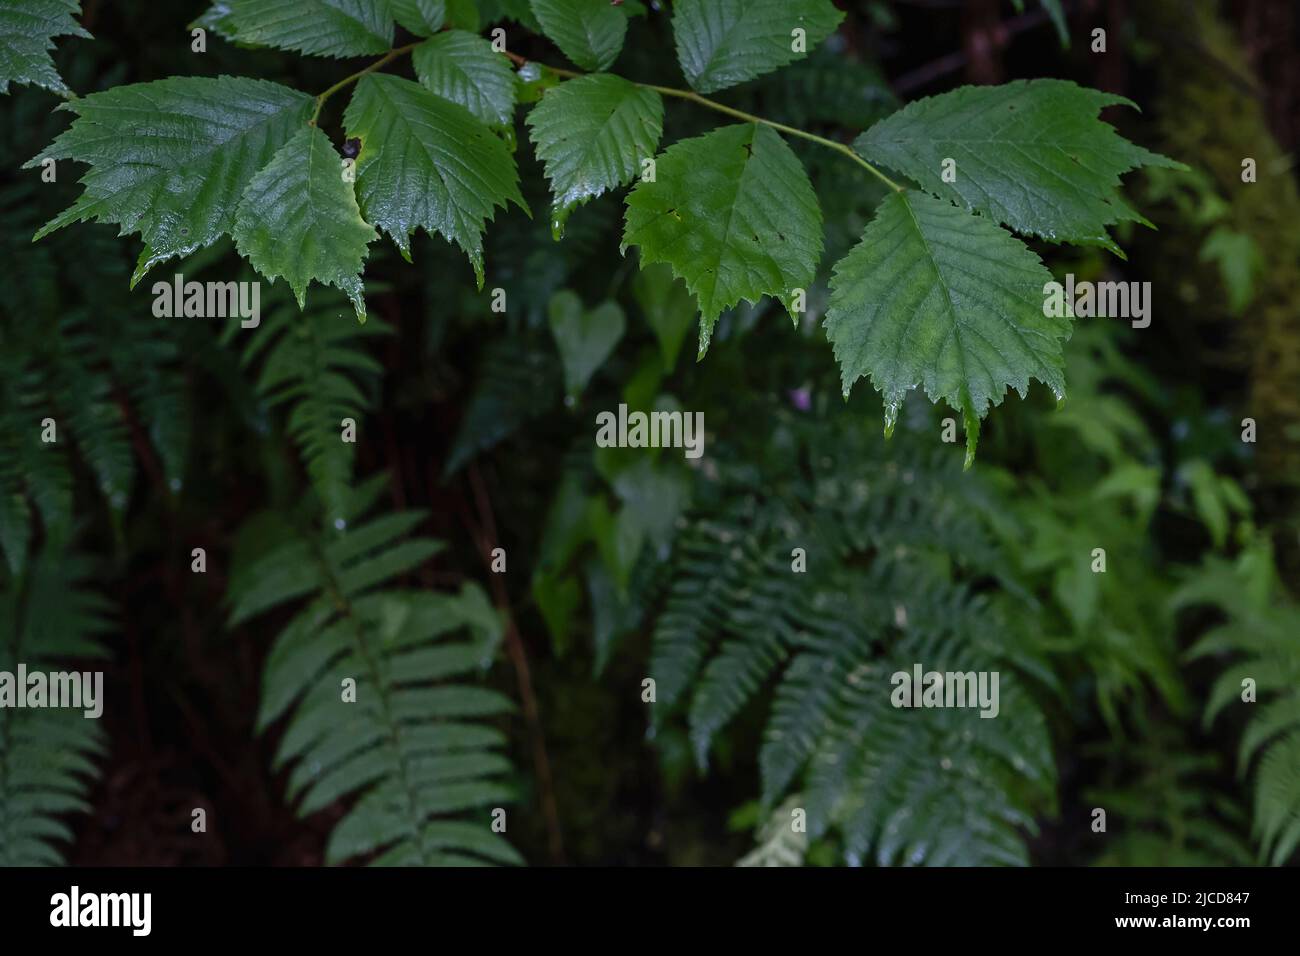 Wych elm (Ulmus glabra) green leaves Stock Photo